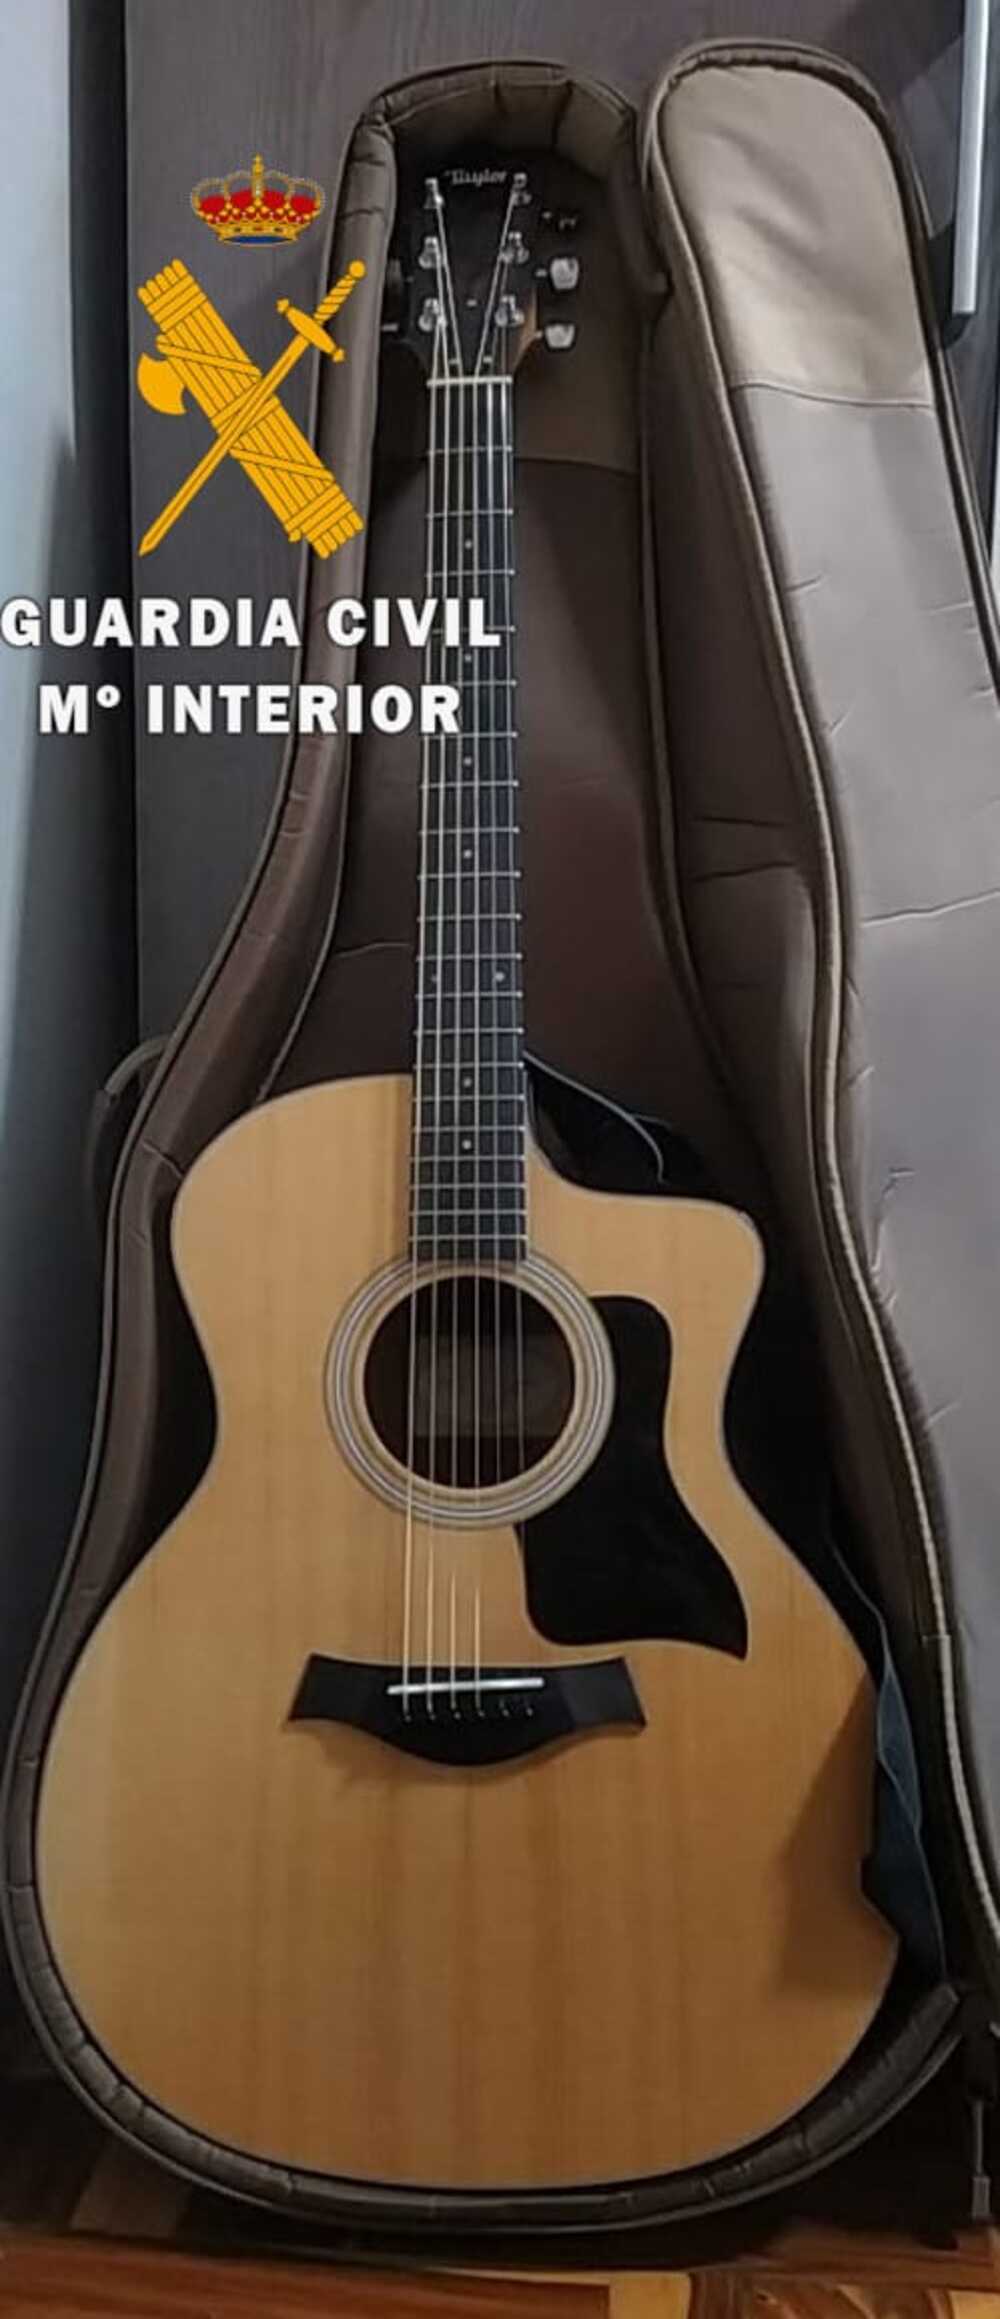 La guitarra robada del centro de acogida